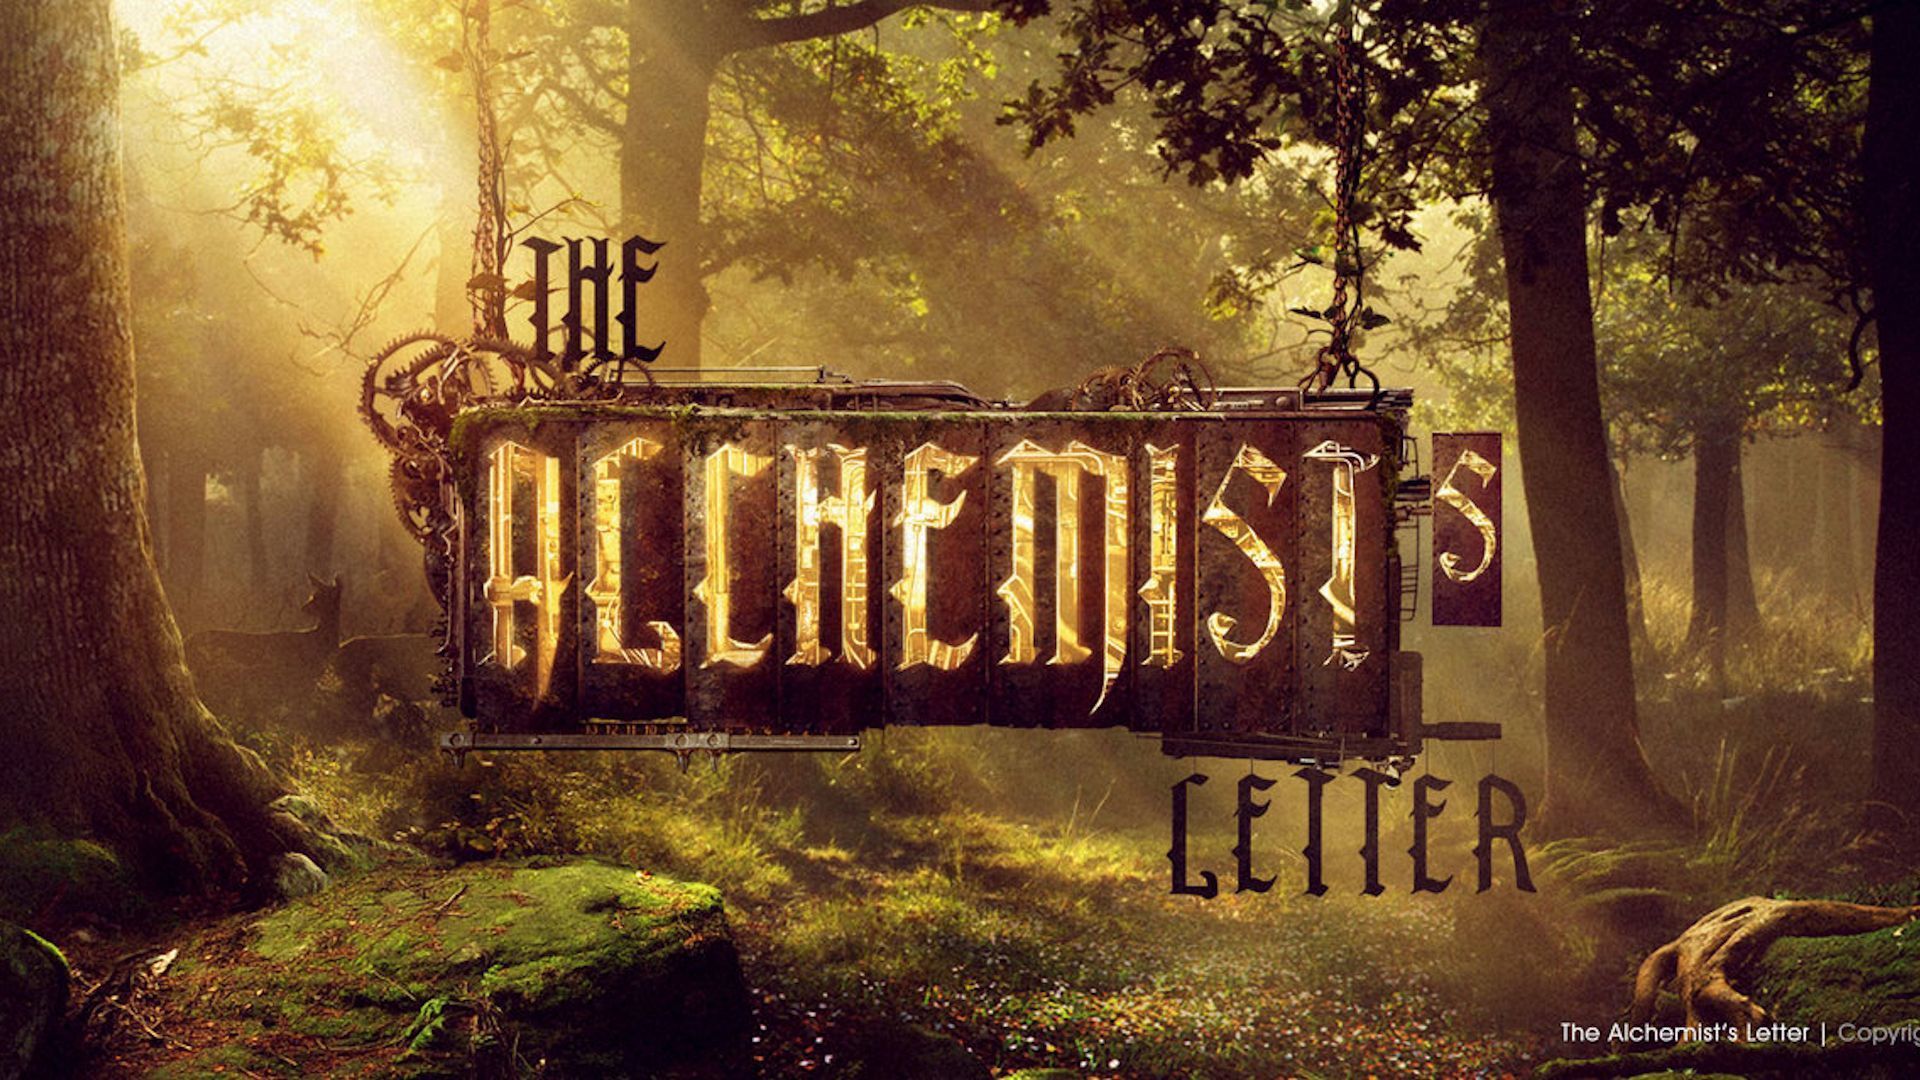 The Alchemist's Letter